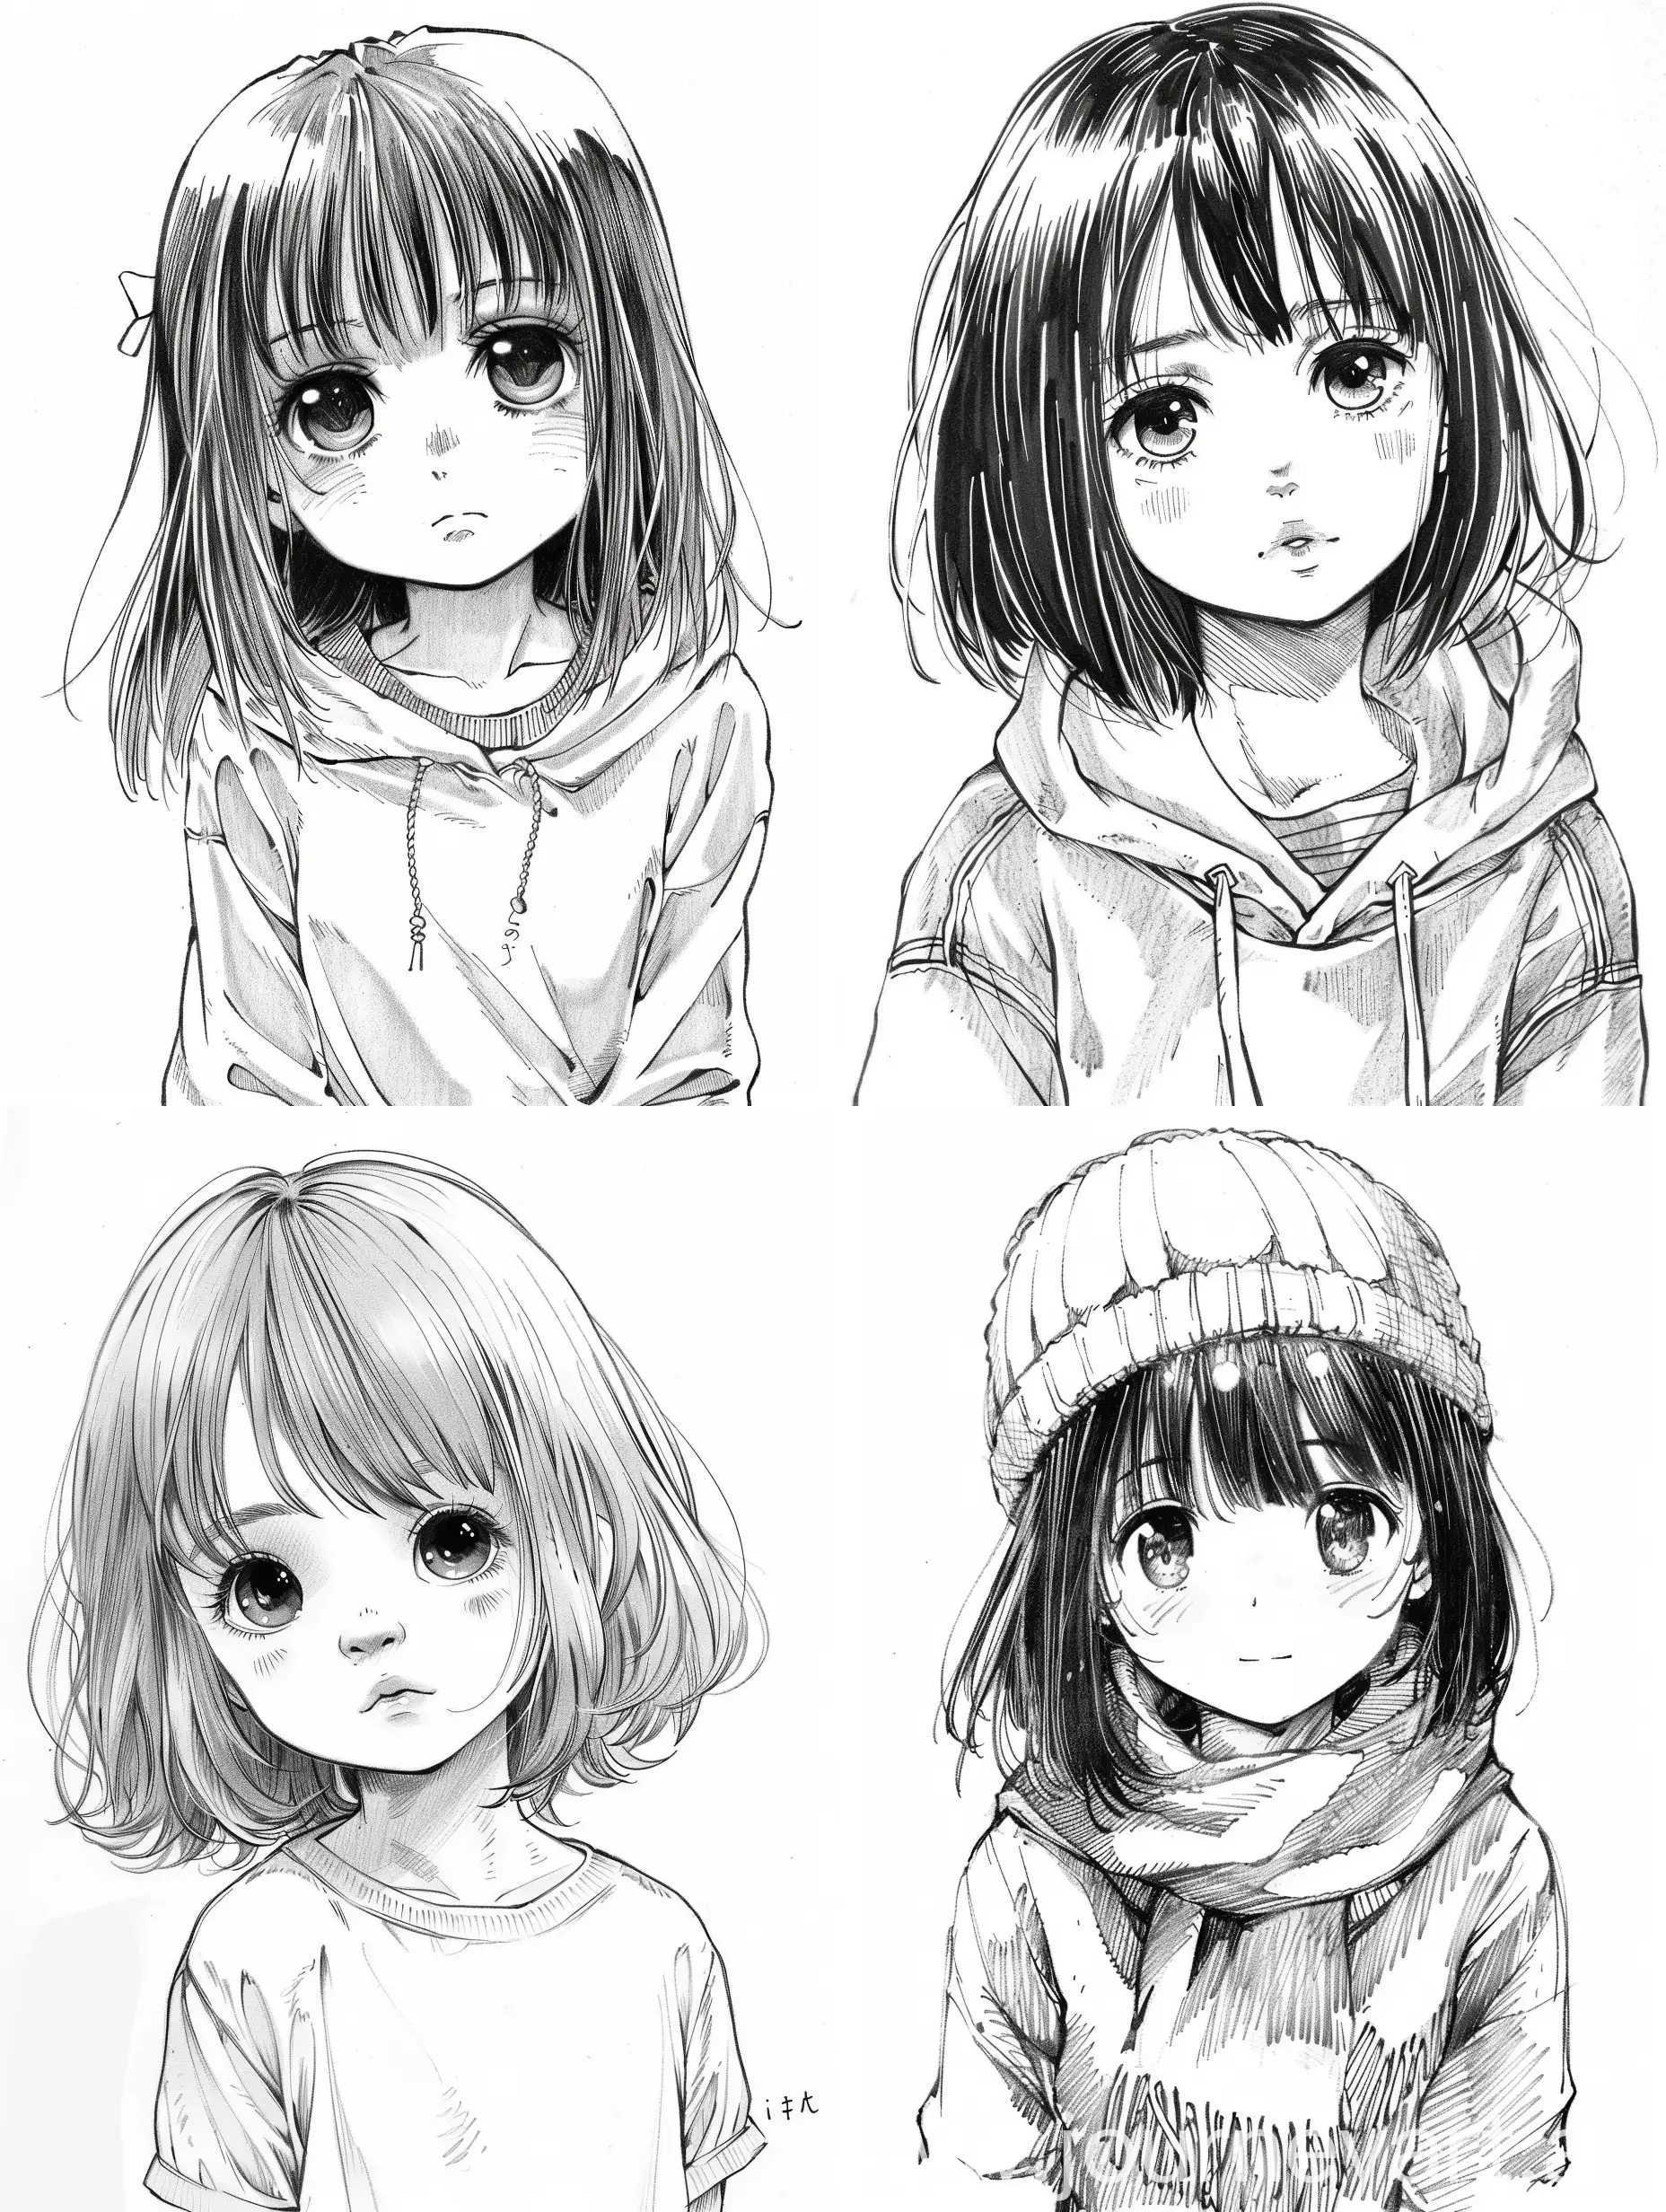 Adorable-6YearOld-Manga-Girl-Inspired-by-Junji-Itos-Style